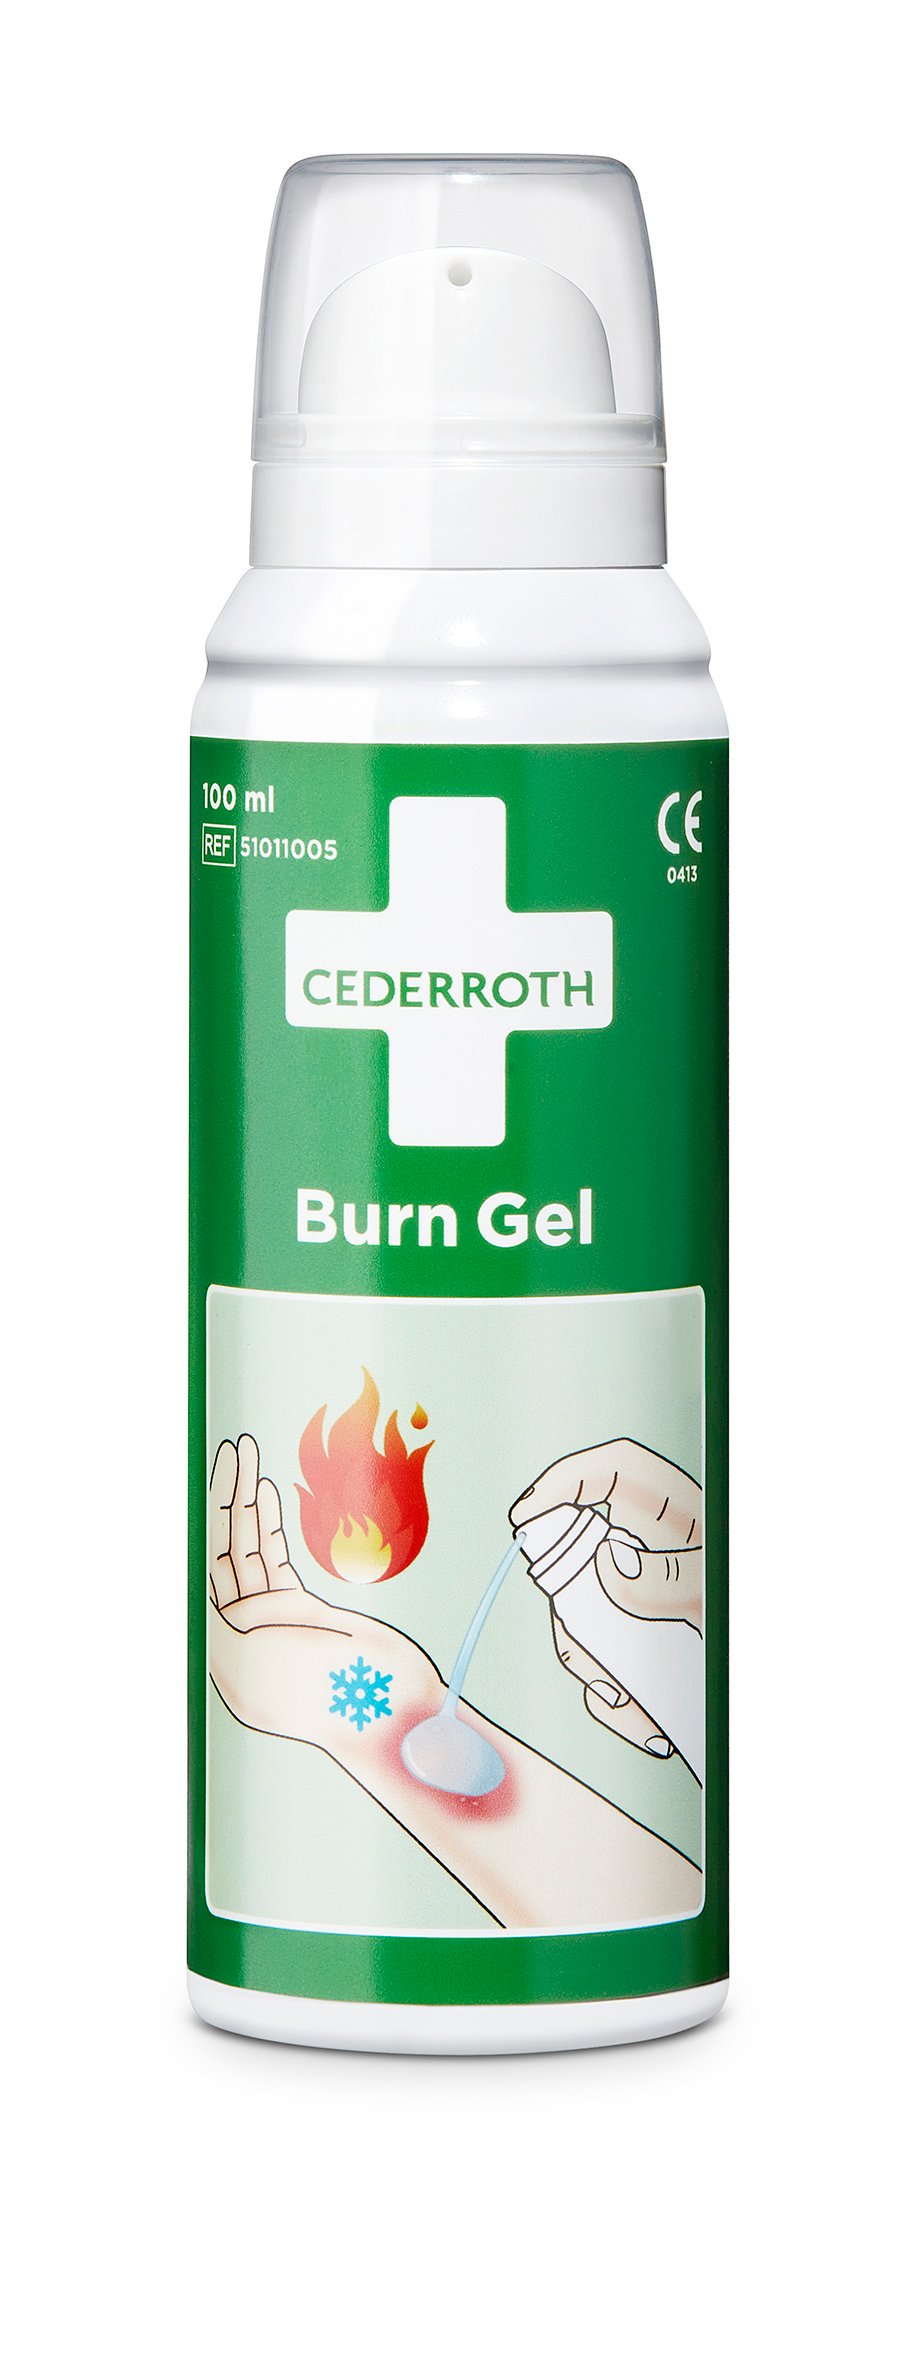 Brännskadegel Cederroth Burn Gel 100ml 51500223